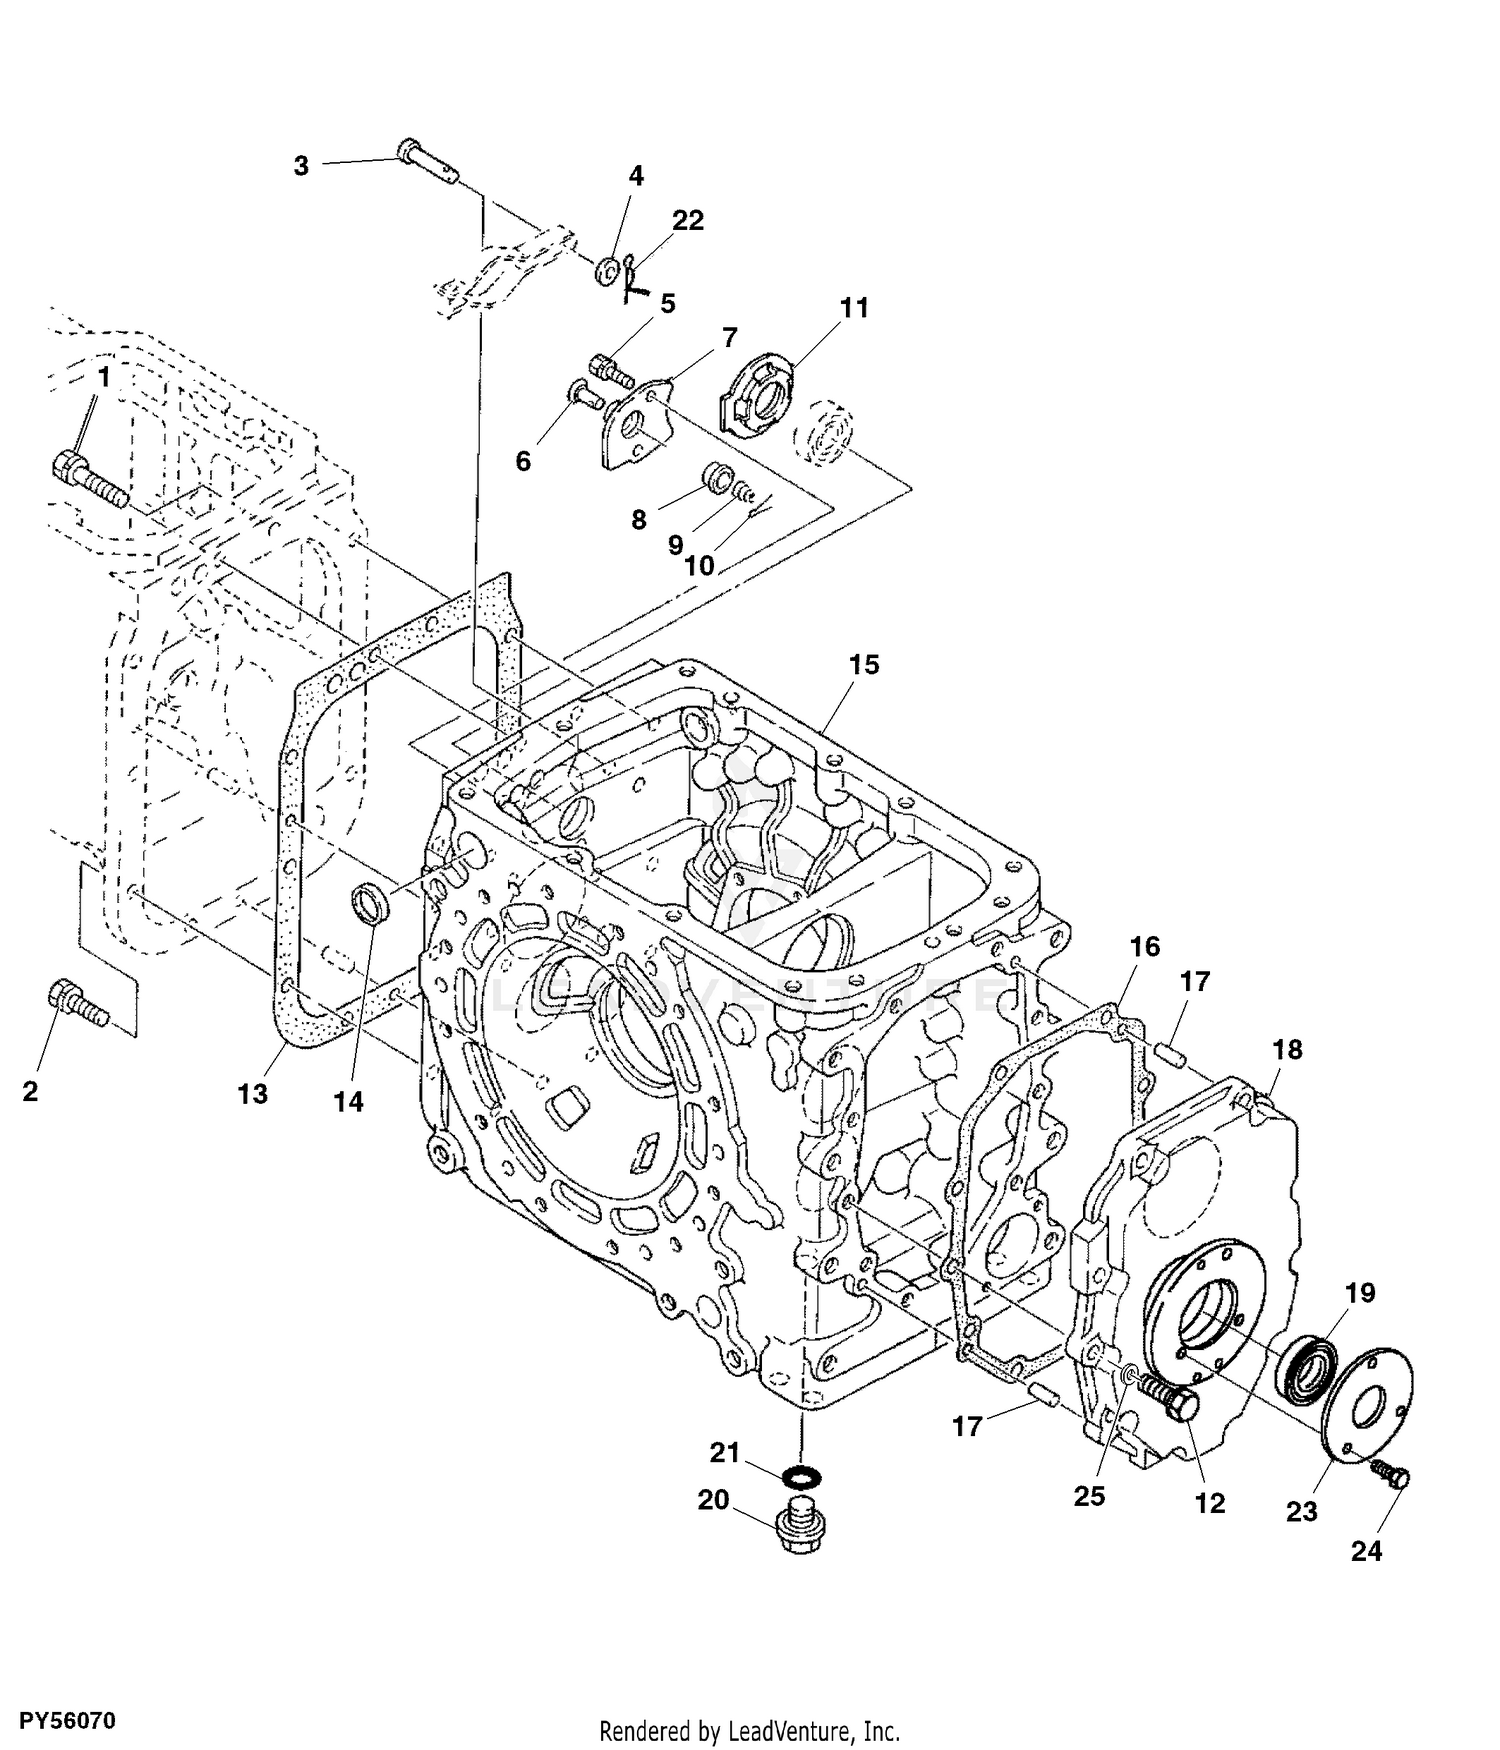 John Deere 790 clutch return spring/parts diagram